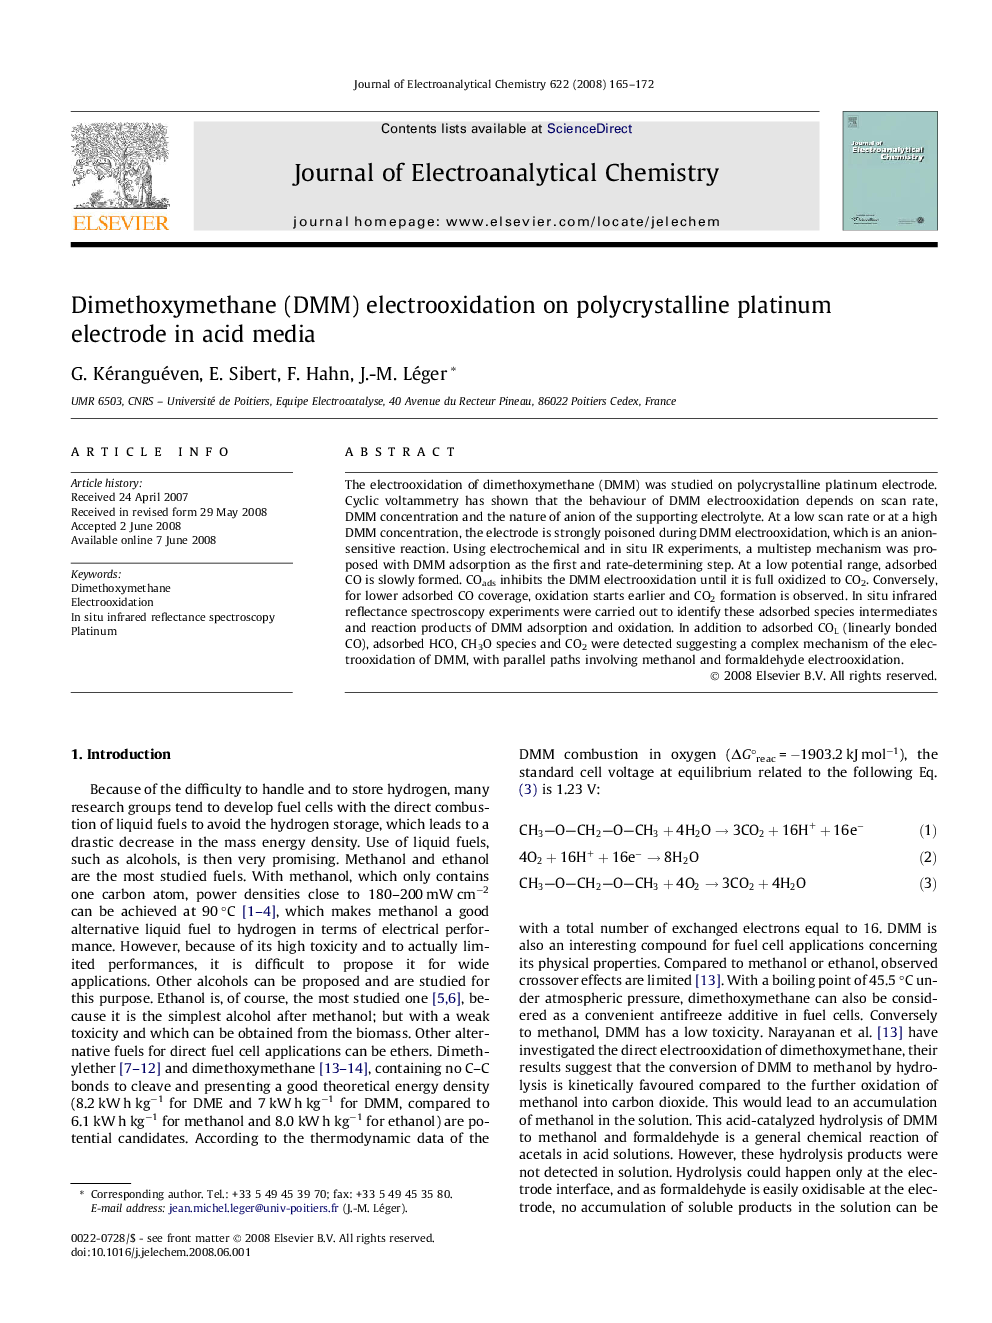 Dimethoxymethane (DMM) electrooxidation on polycrystalline platinum electrode in acid media